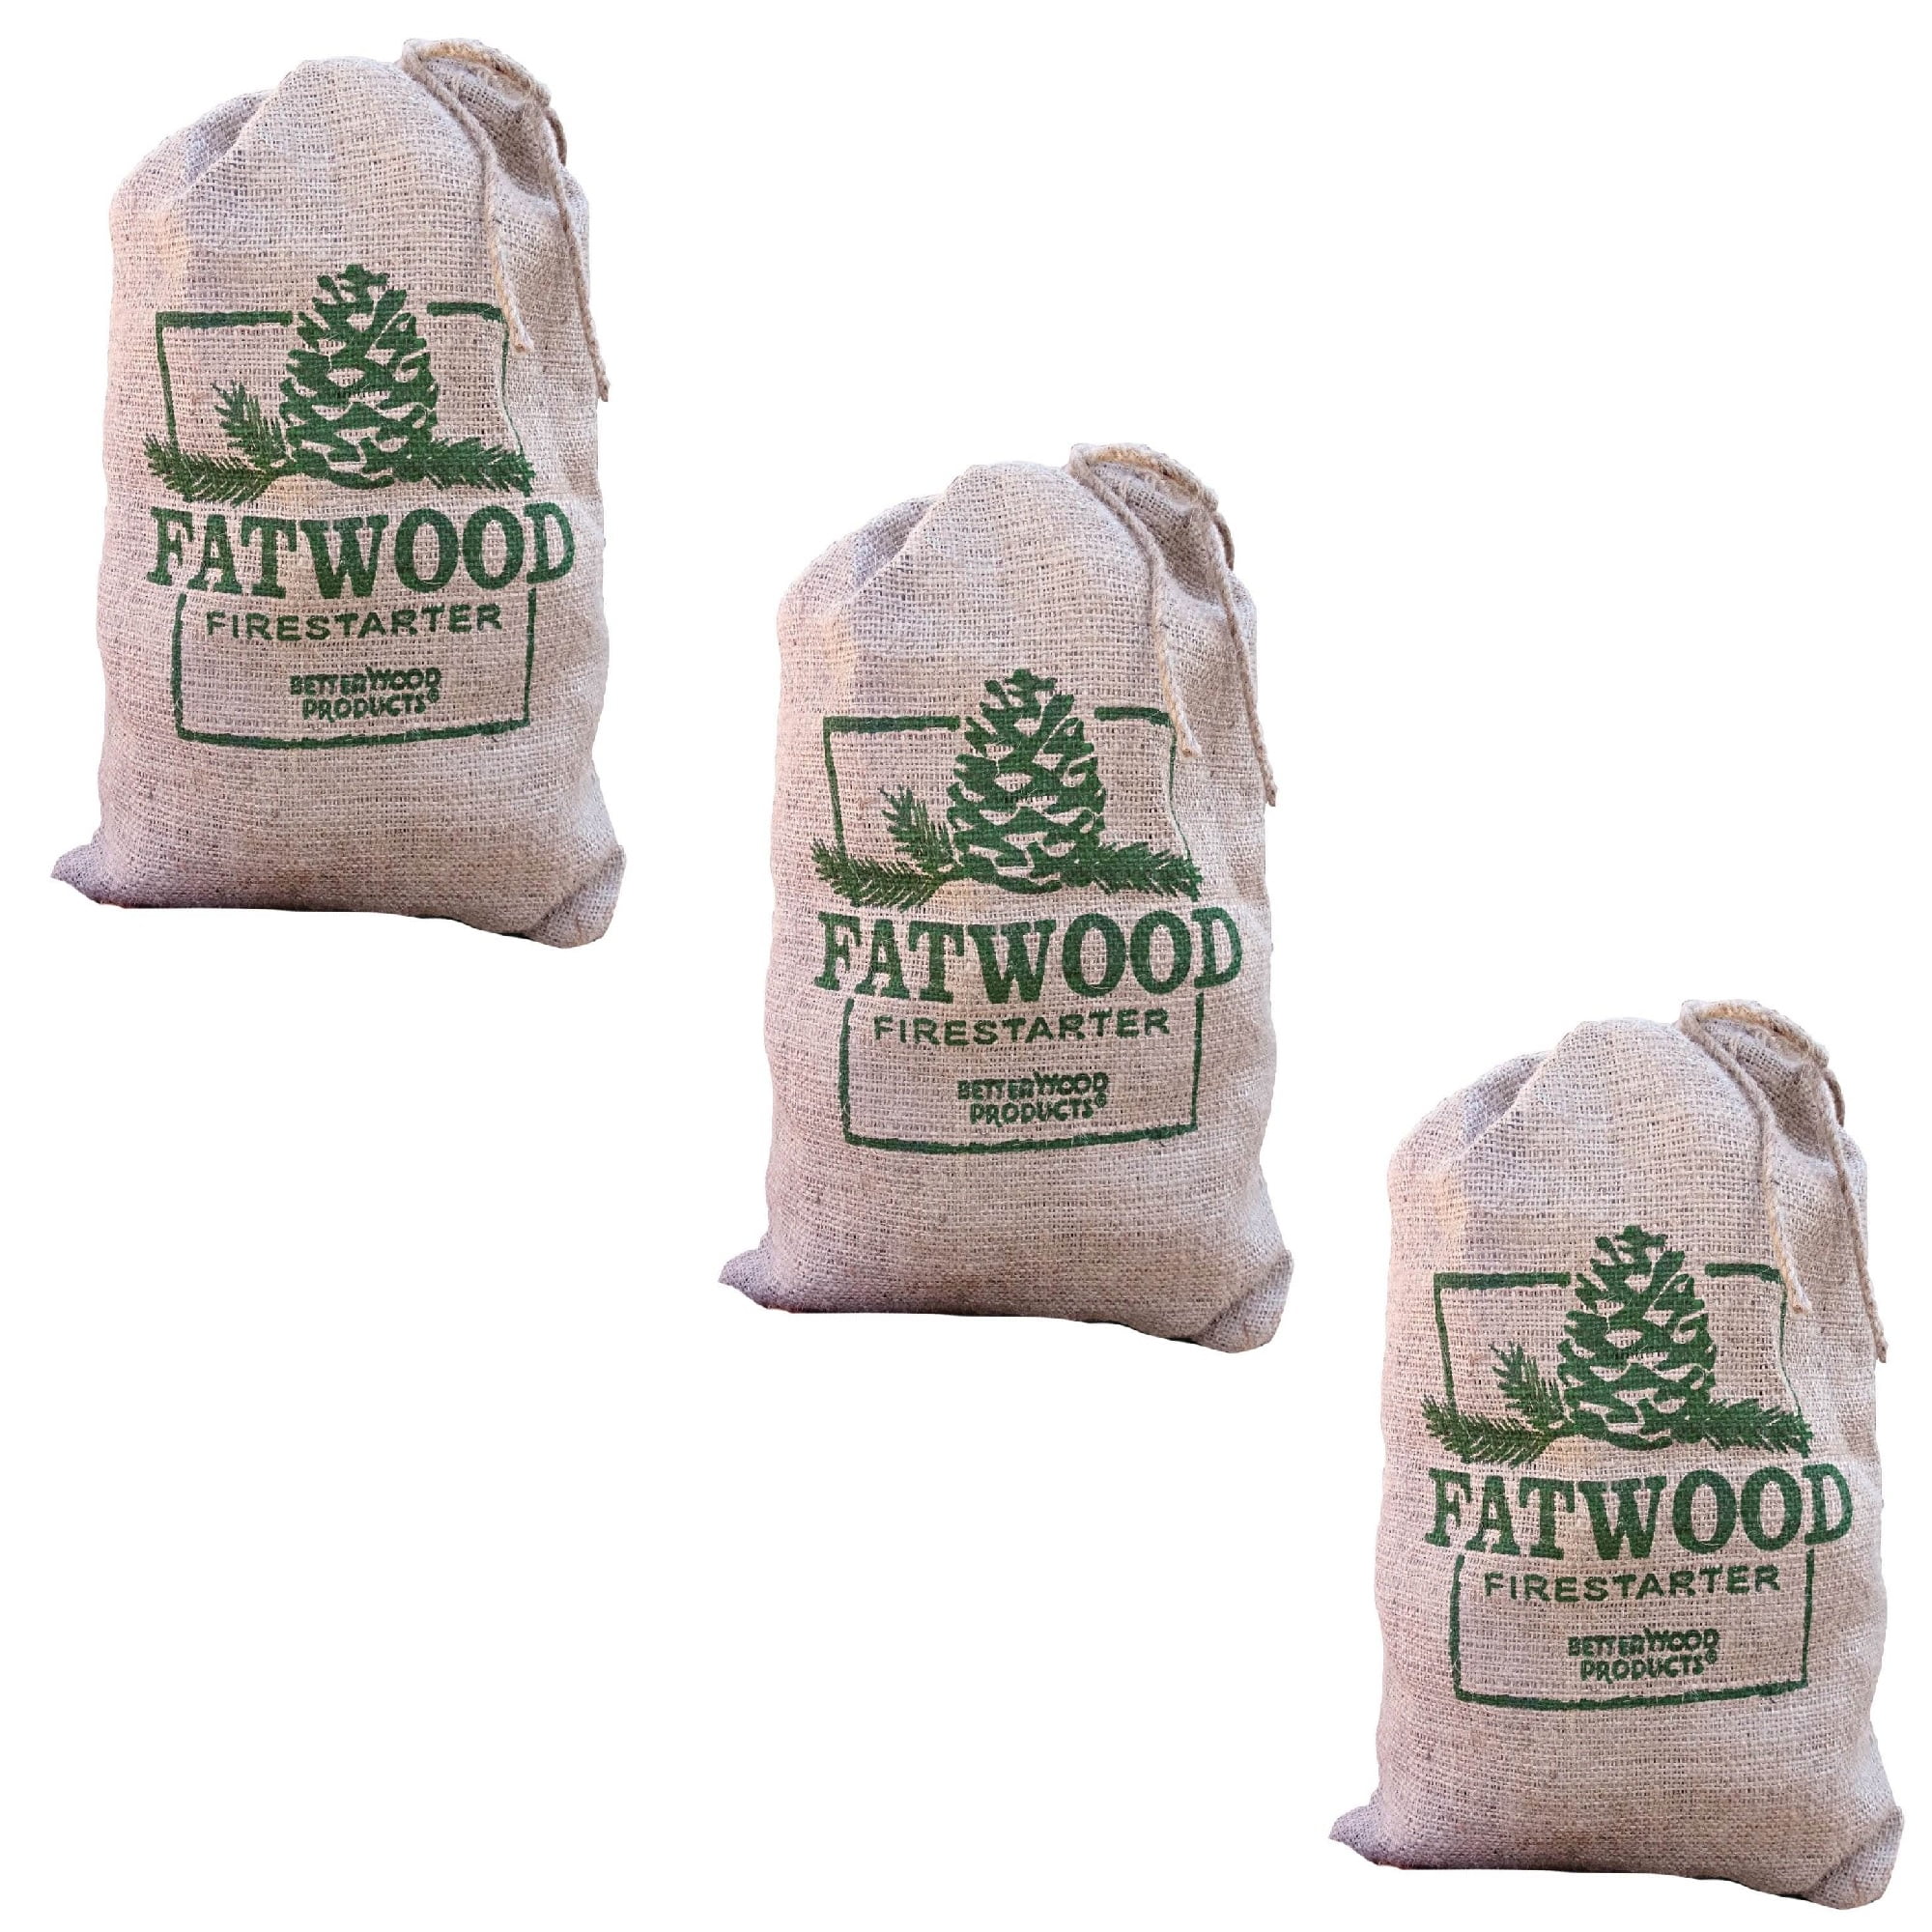 Betterwood Products Fatwood Firestarter 10 Pound Burlap Bag 